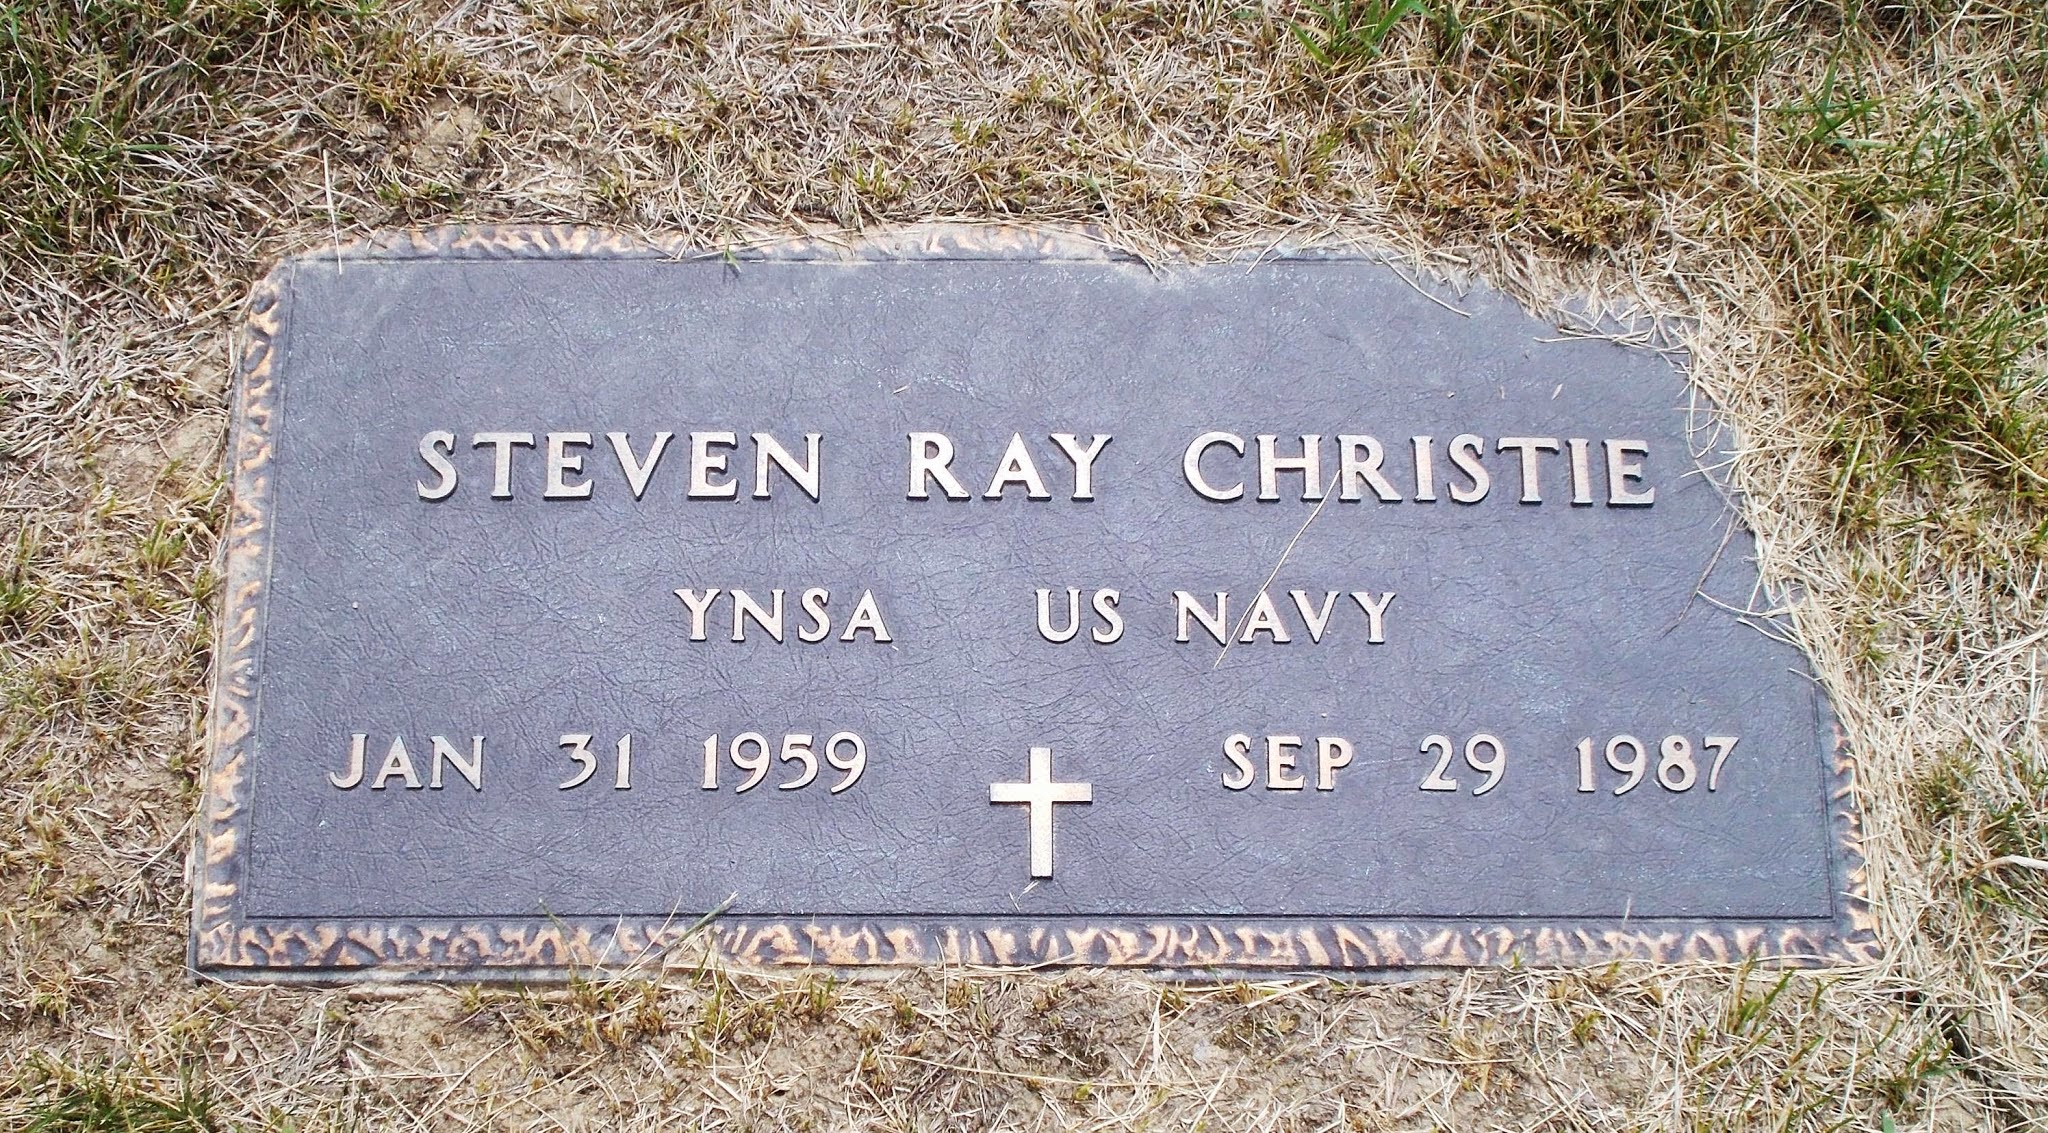 Steven Ray Christie